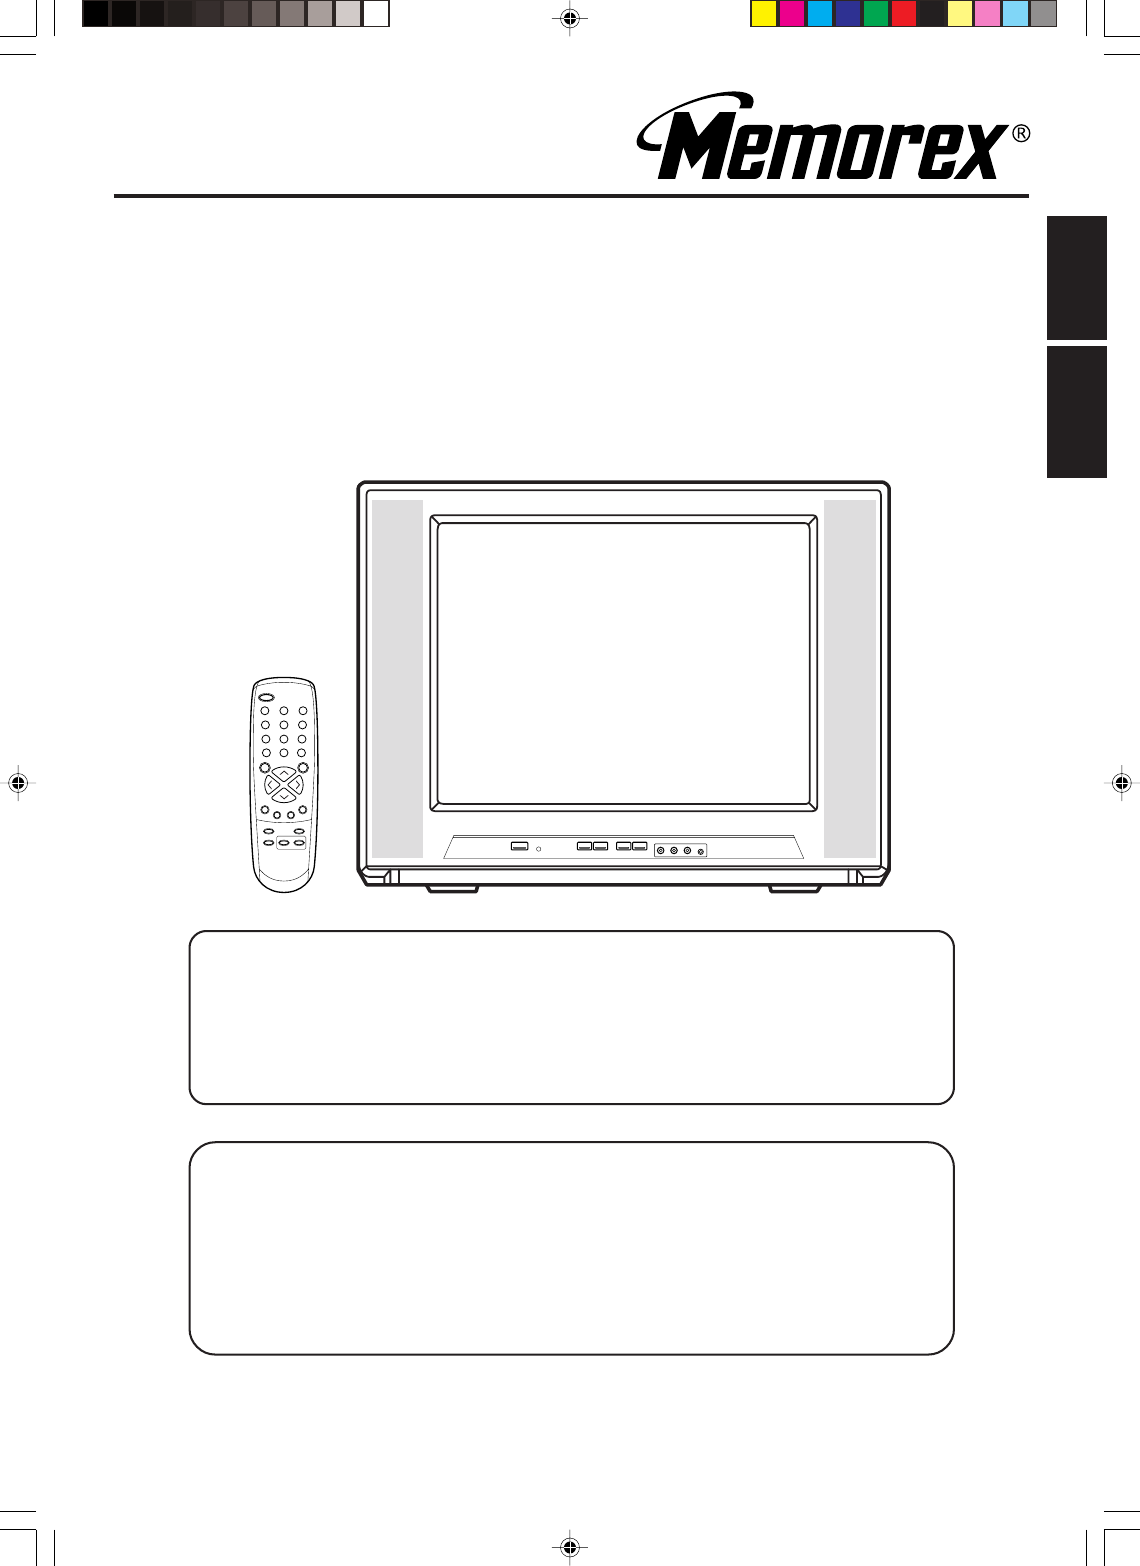 Memorex CRT Television MT2012 User Guide | ManualsOnline.com